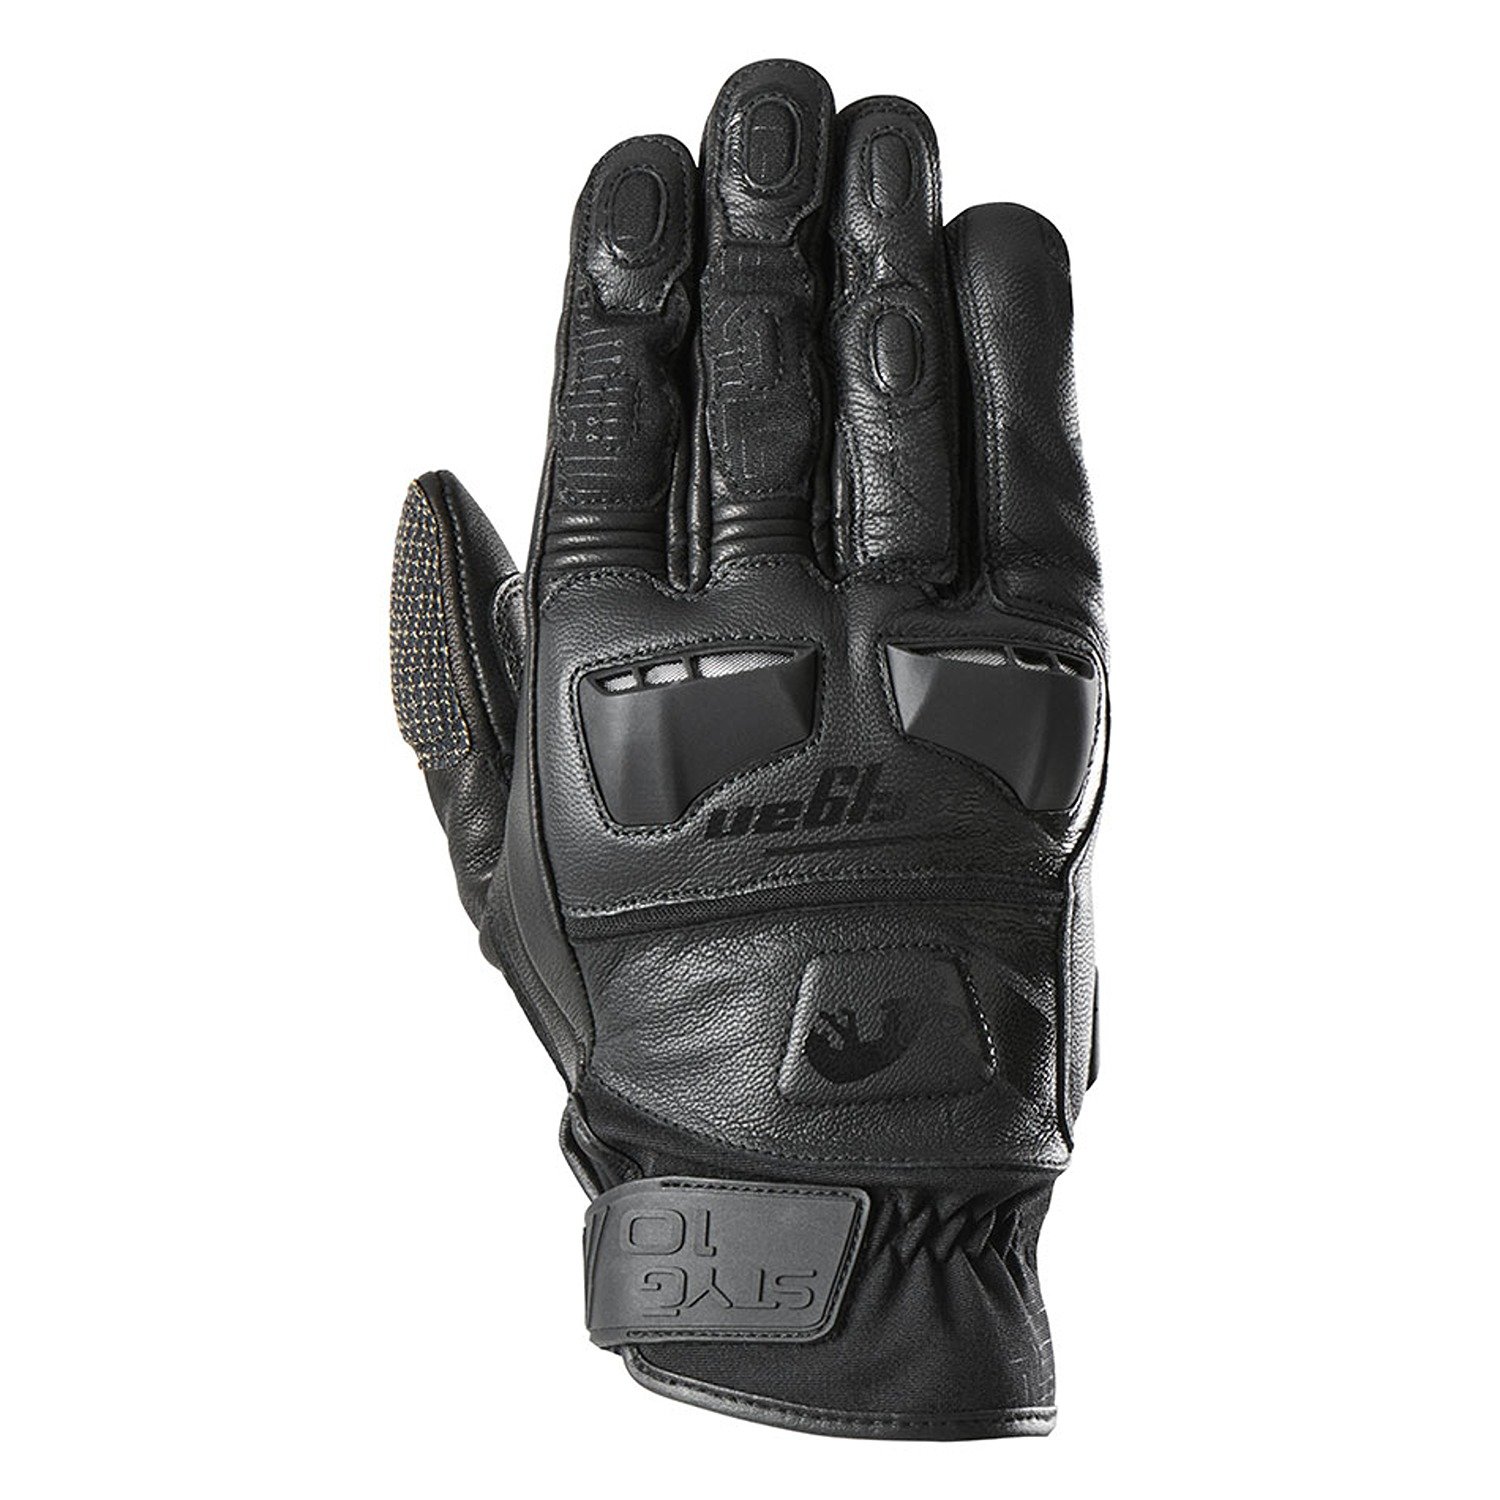 Image of Furygan Styg10 Gloves Black Size 2XL ID 3435980379186